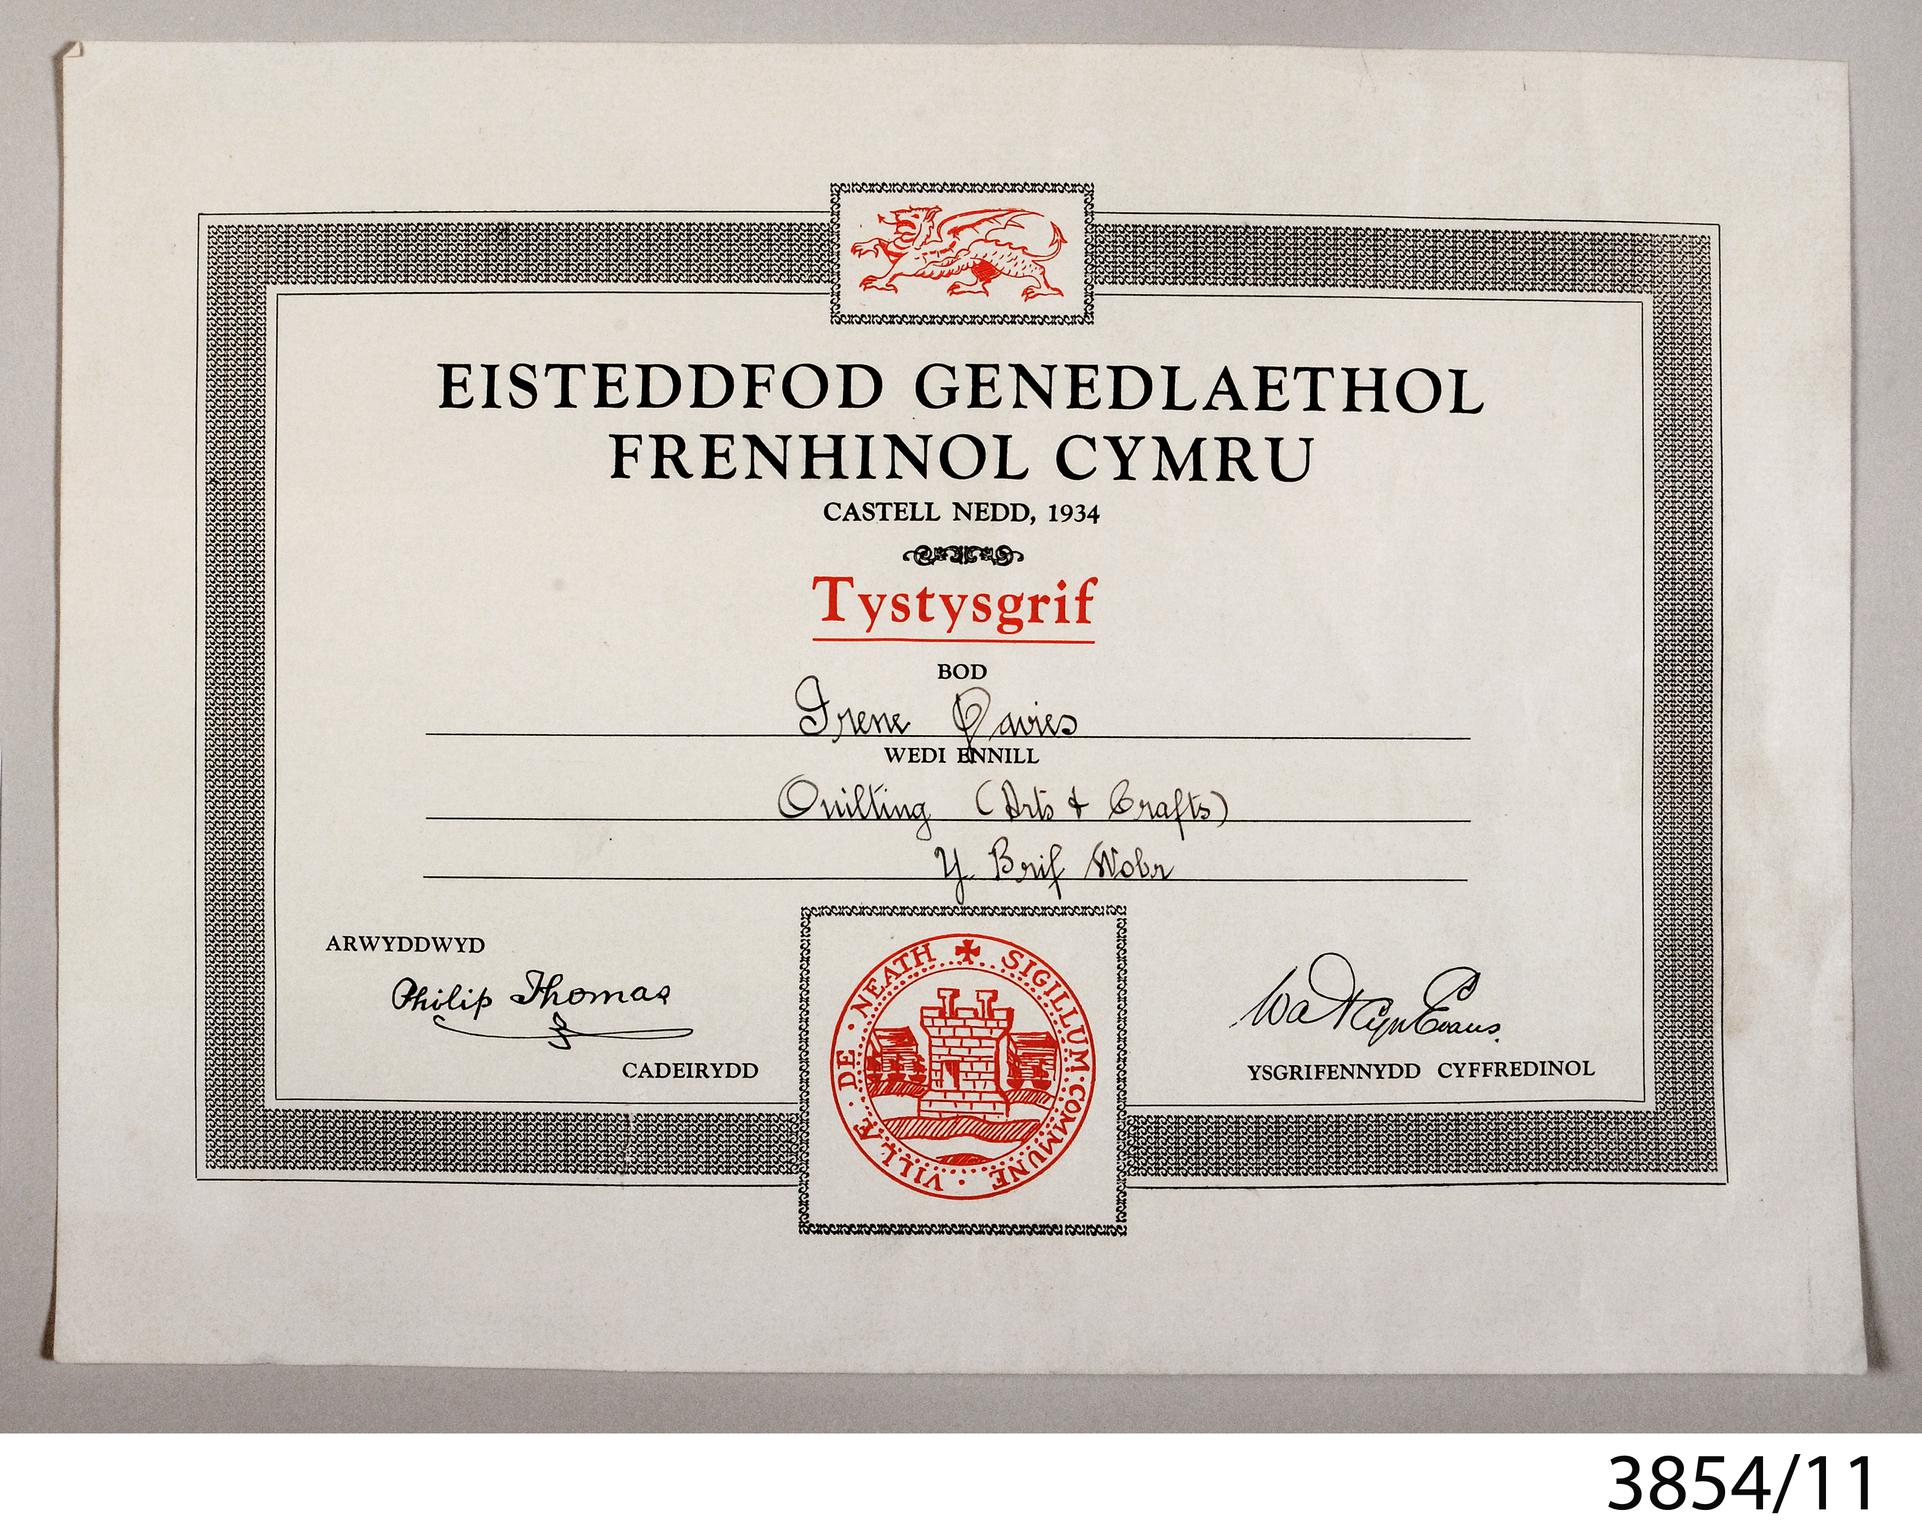 Eisteddfod certificate